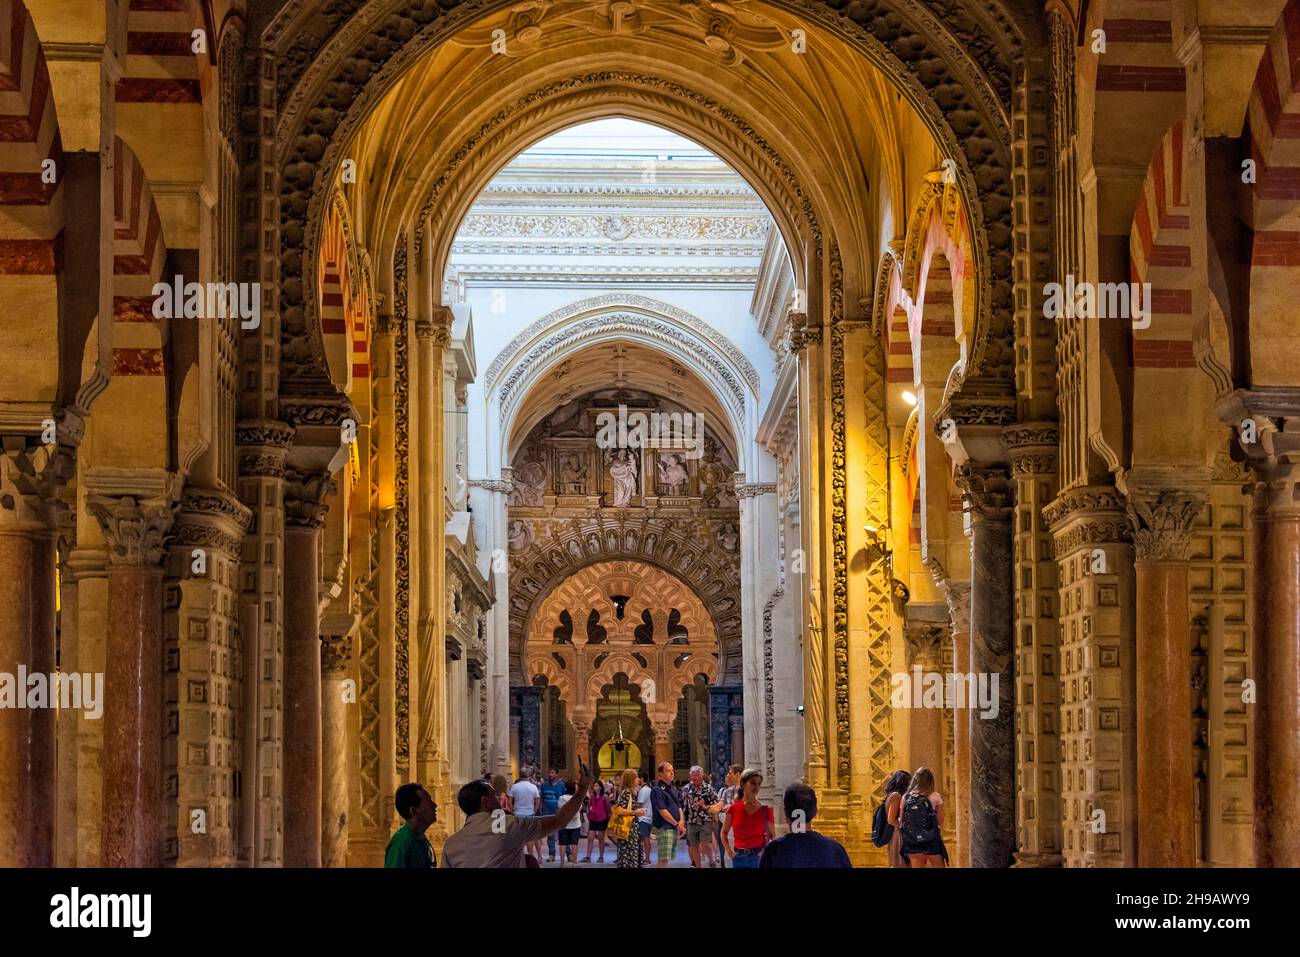 Tourists inside Mezquita-Cathedral (Mosque-Cathedral or Great Mosque of Cordoba), Cordoba, Cordoba Province, Andalusia Autonomous Community, Spain Stock Photo